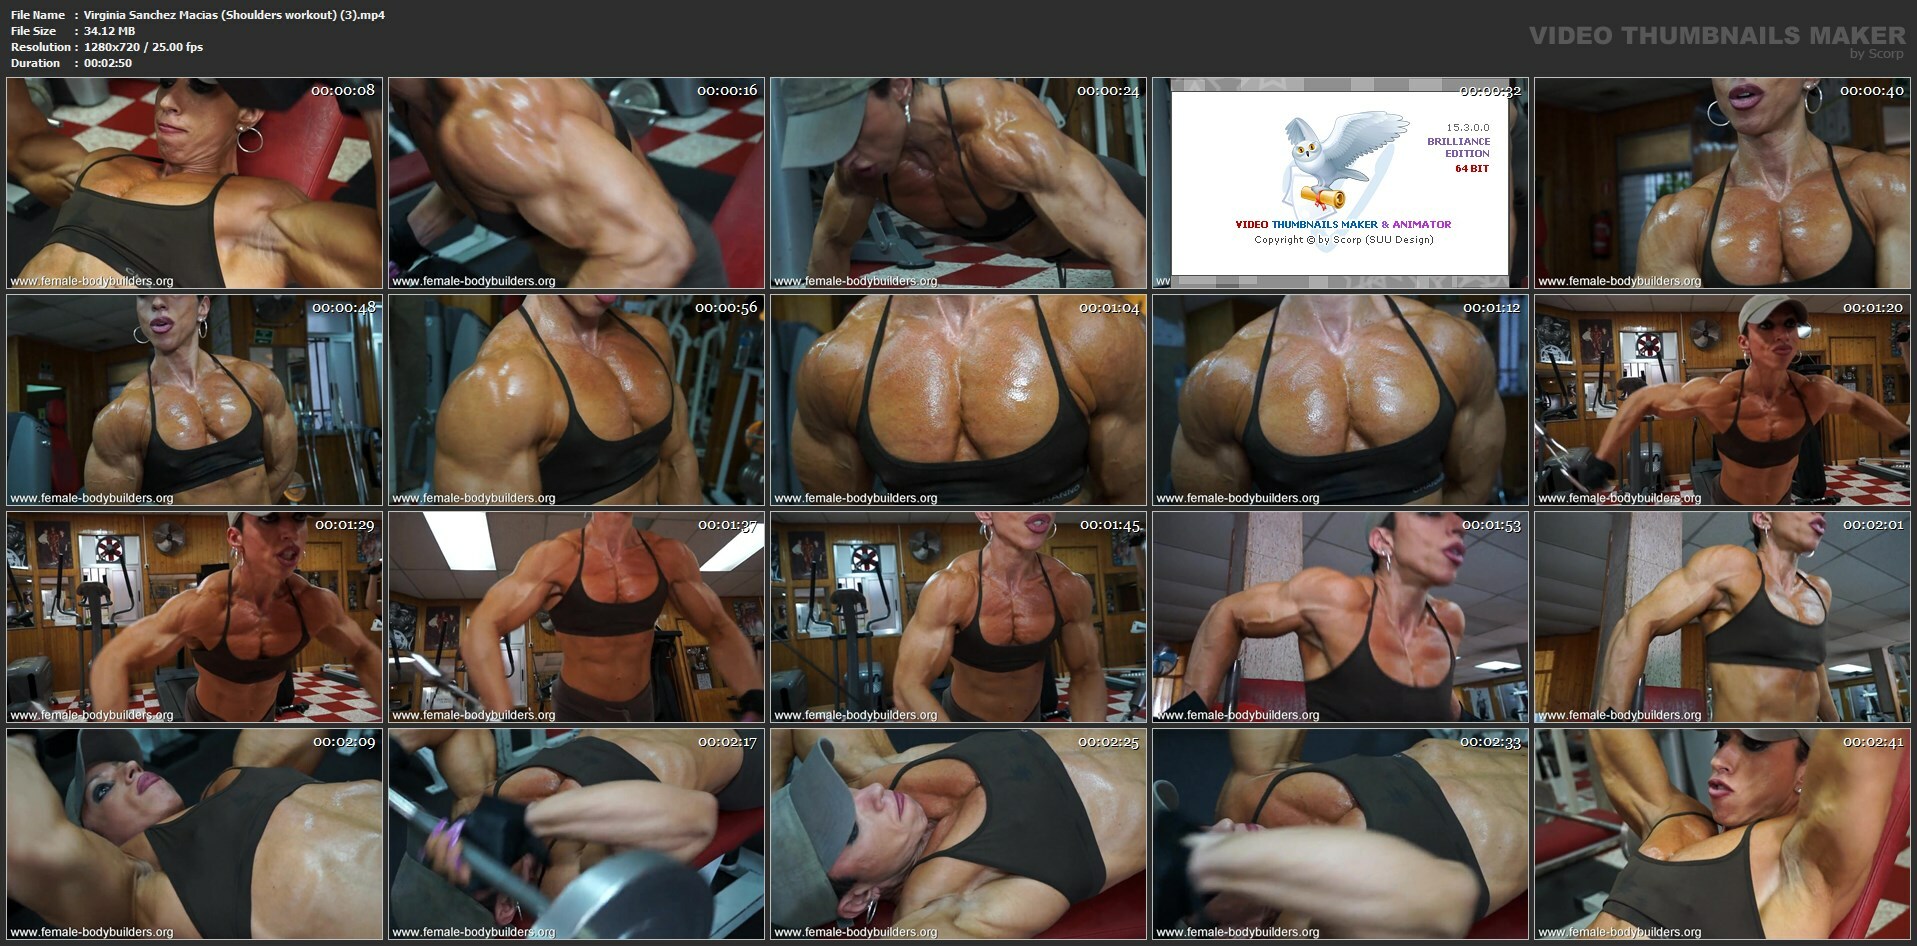 Virginia Sanchez Macias (Shoulders workout) (3).mp4.jpg